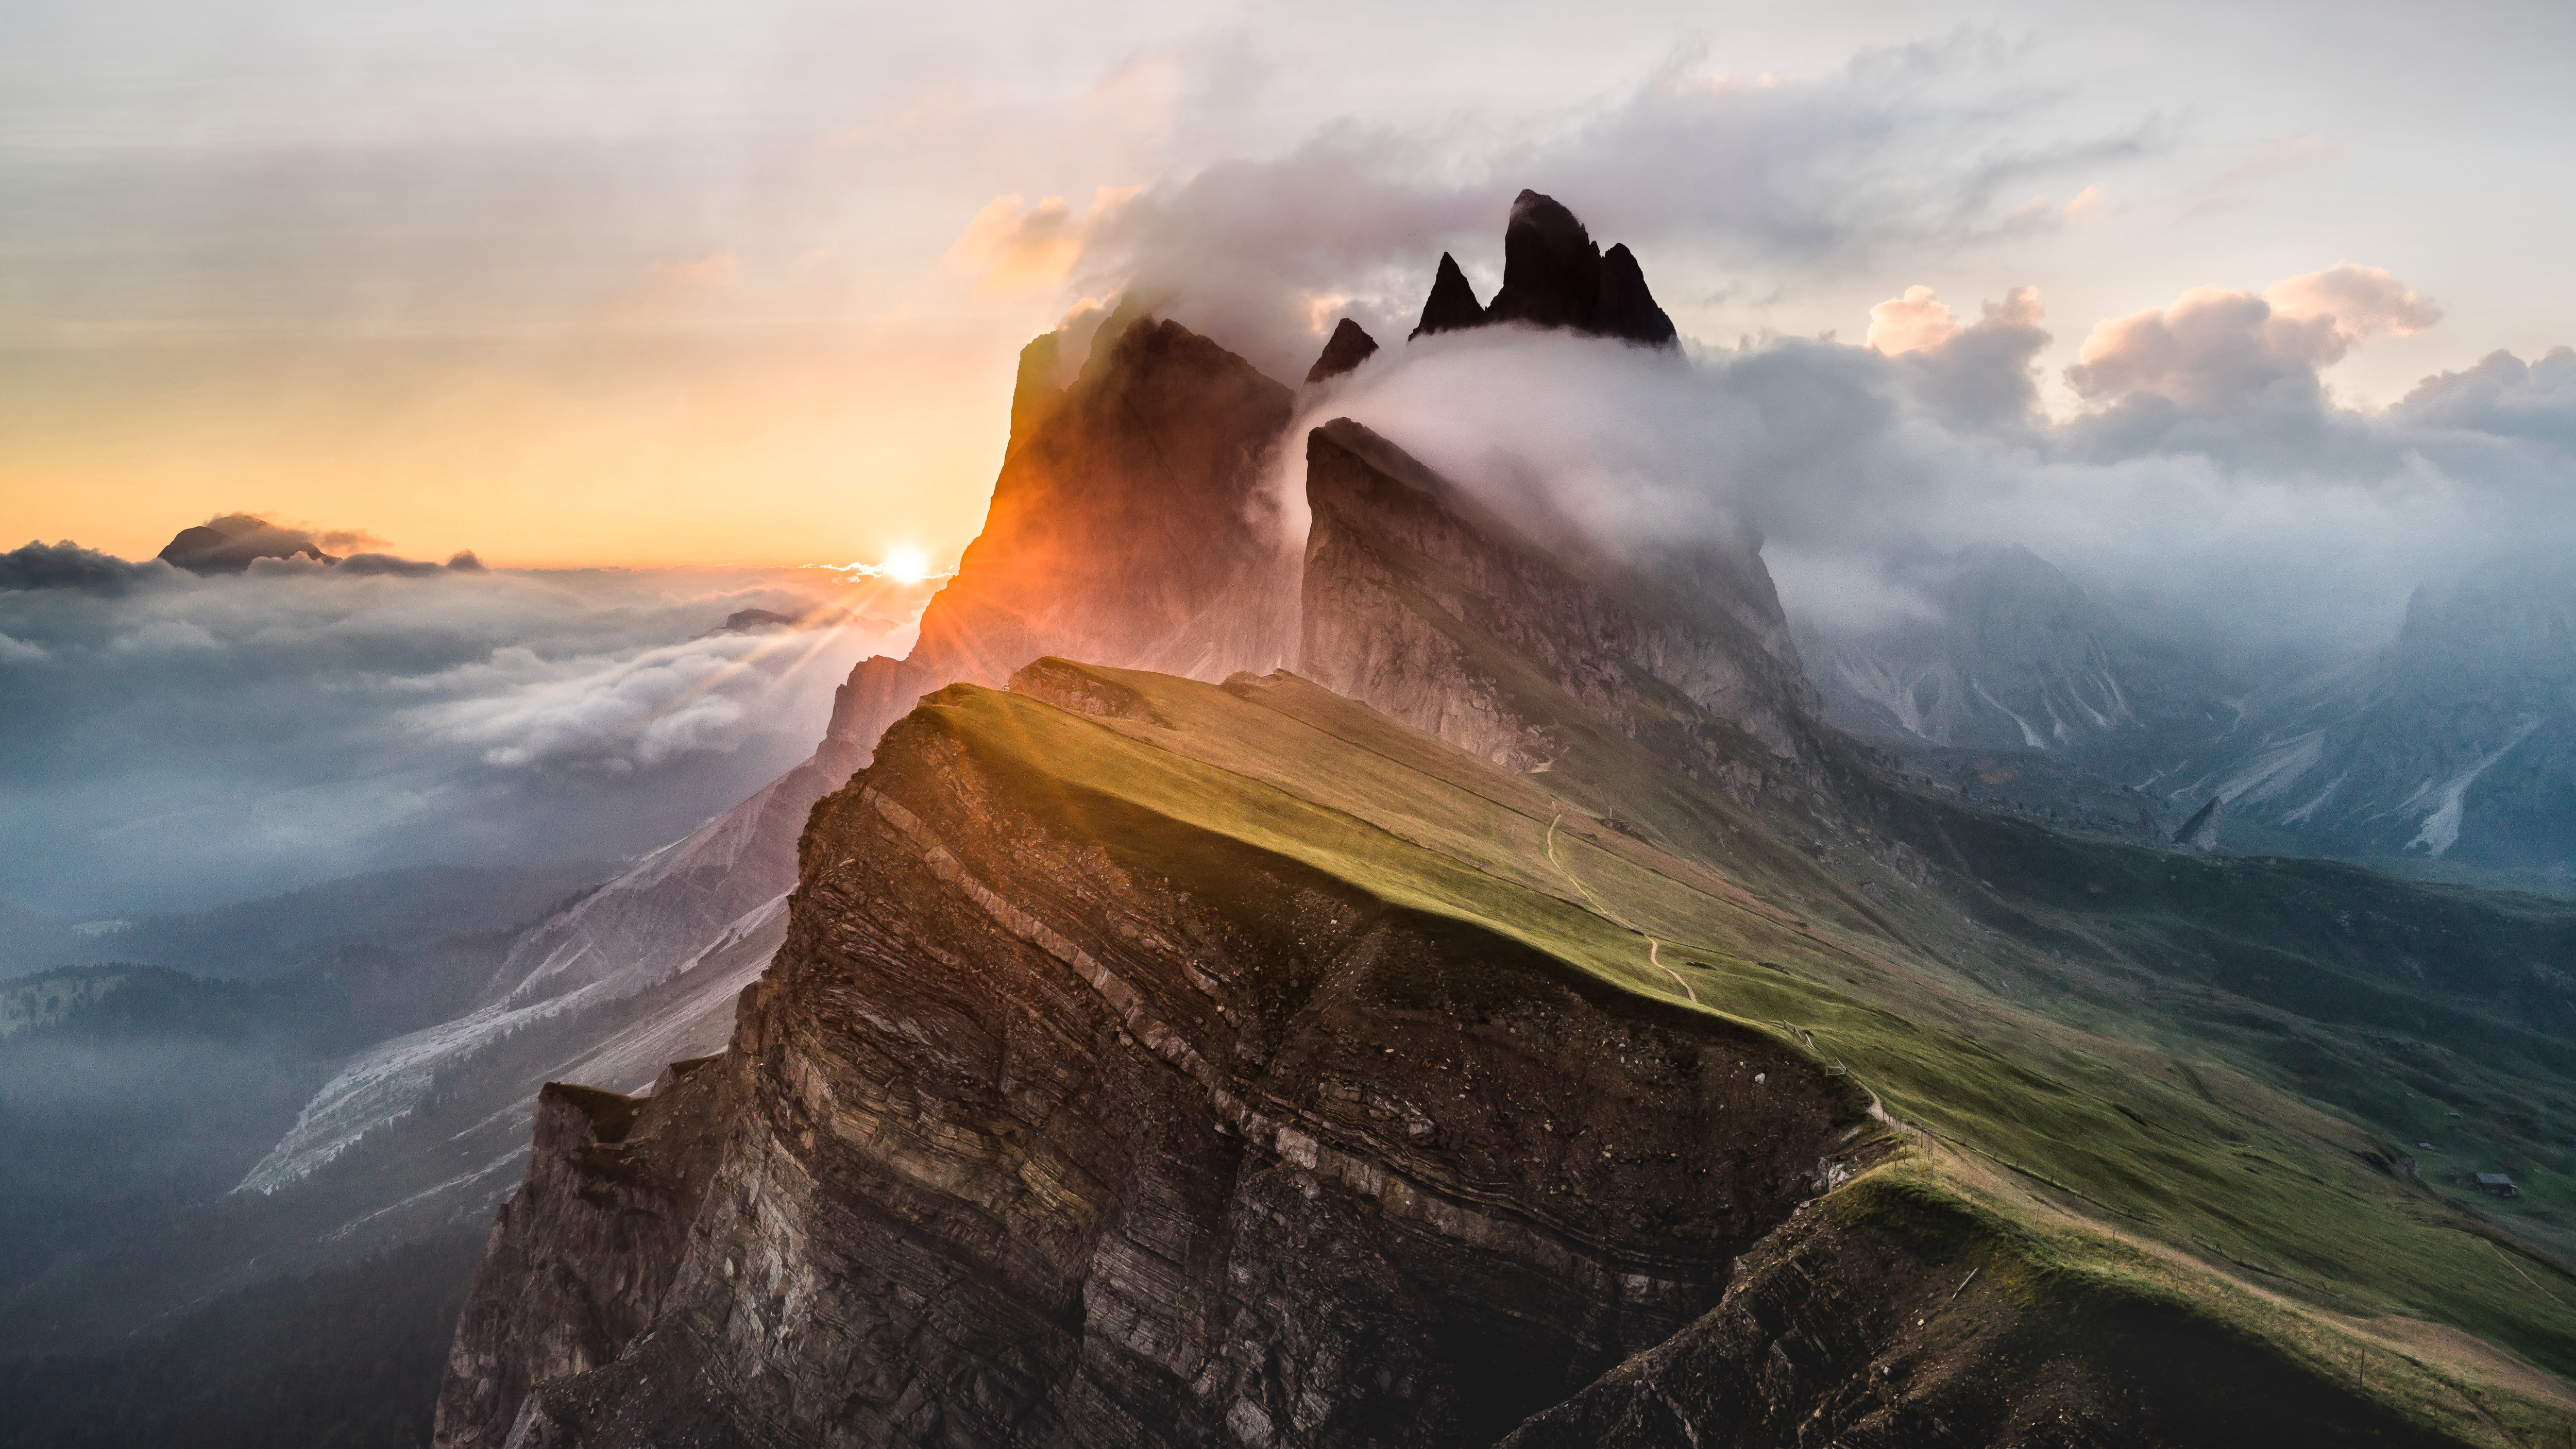 Dolomites Mountain Range Wallpaper Hd Nature 4k Wallpapers Images